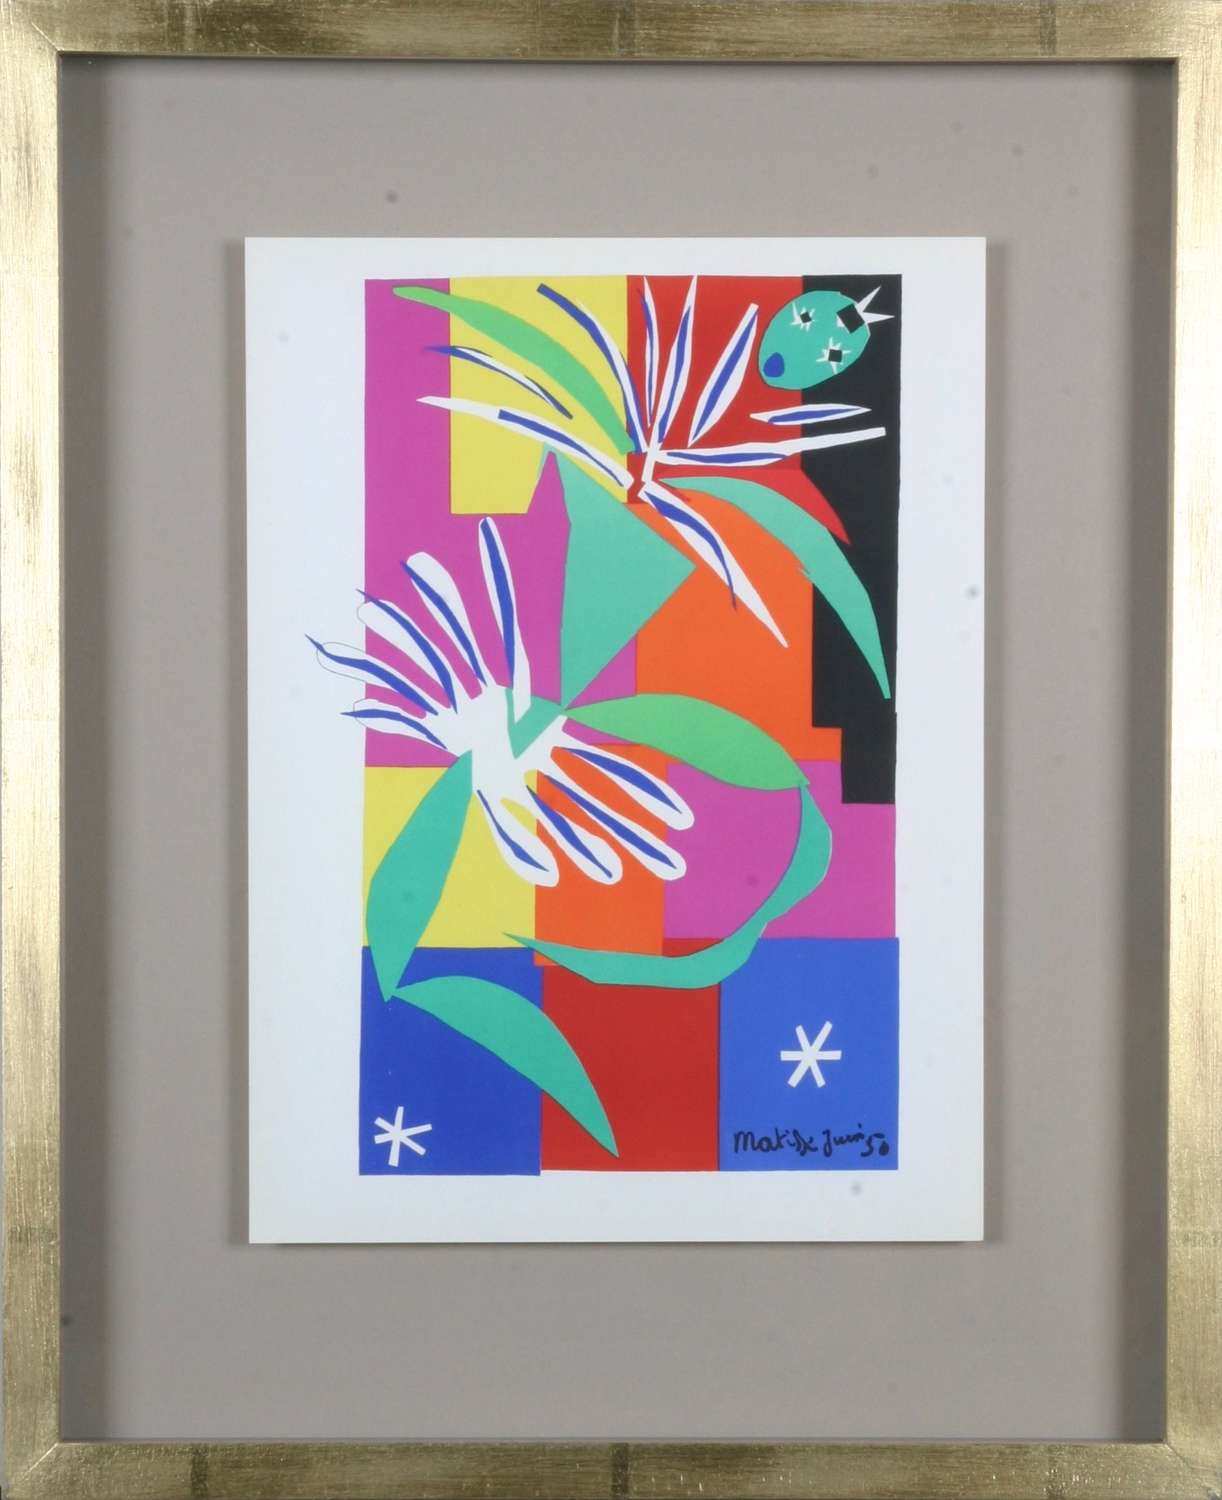 Henri Matisse. Colour Lithographs after the Cut-Outs, 1958.